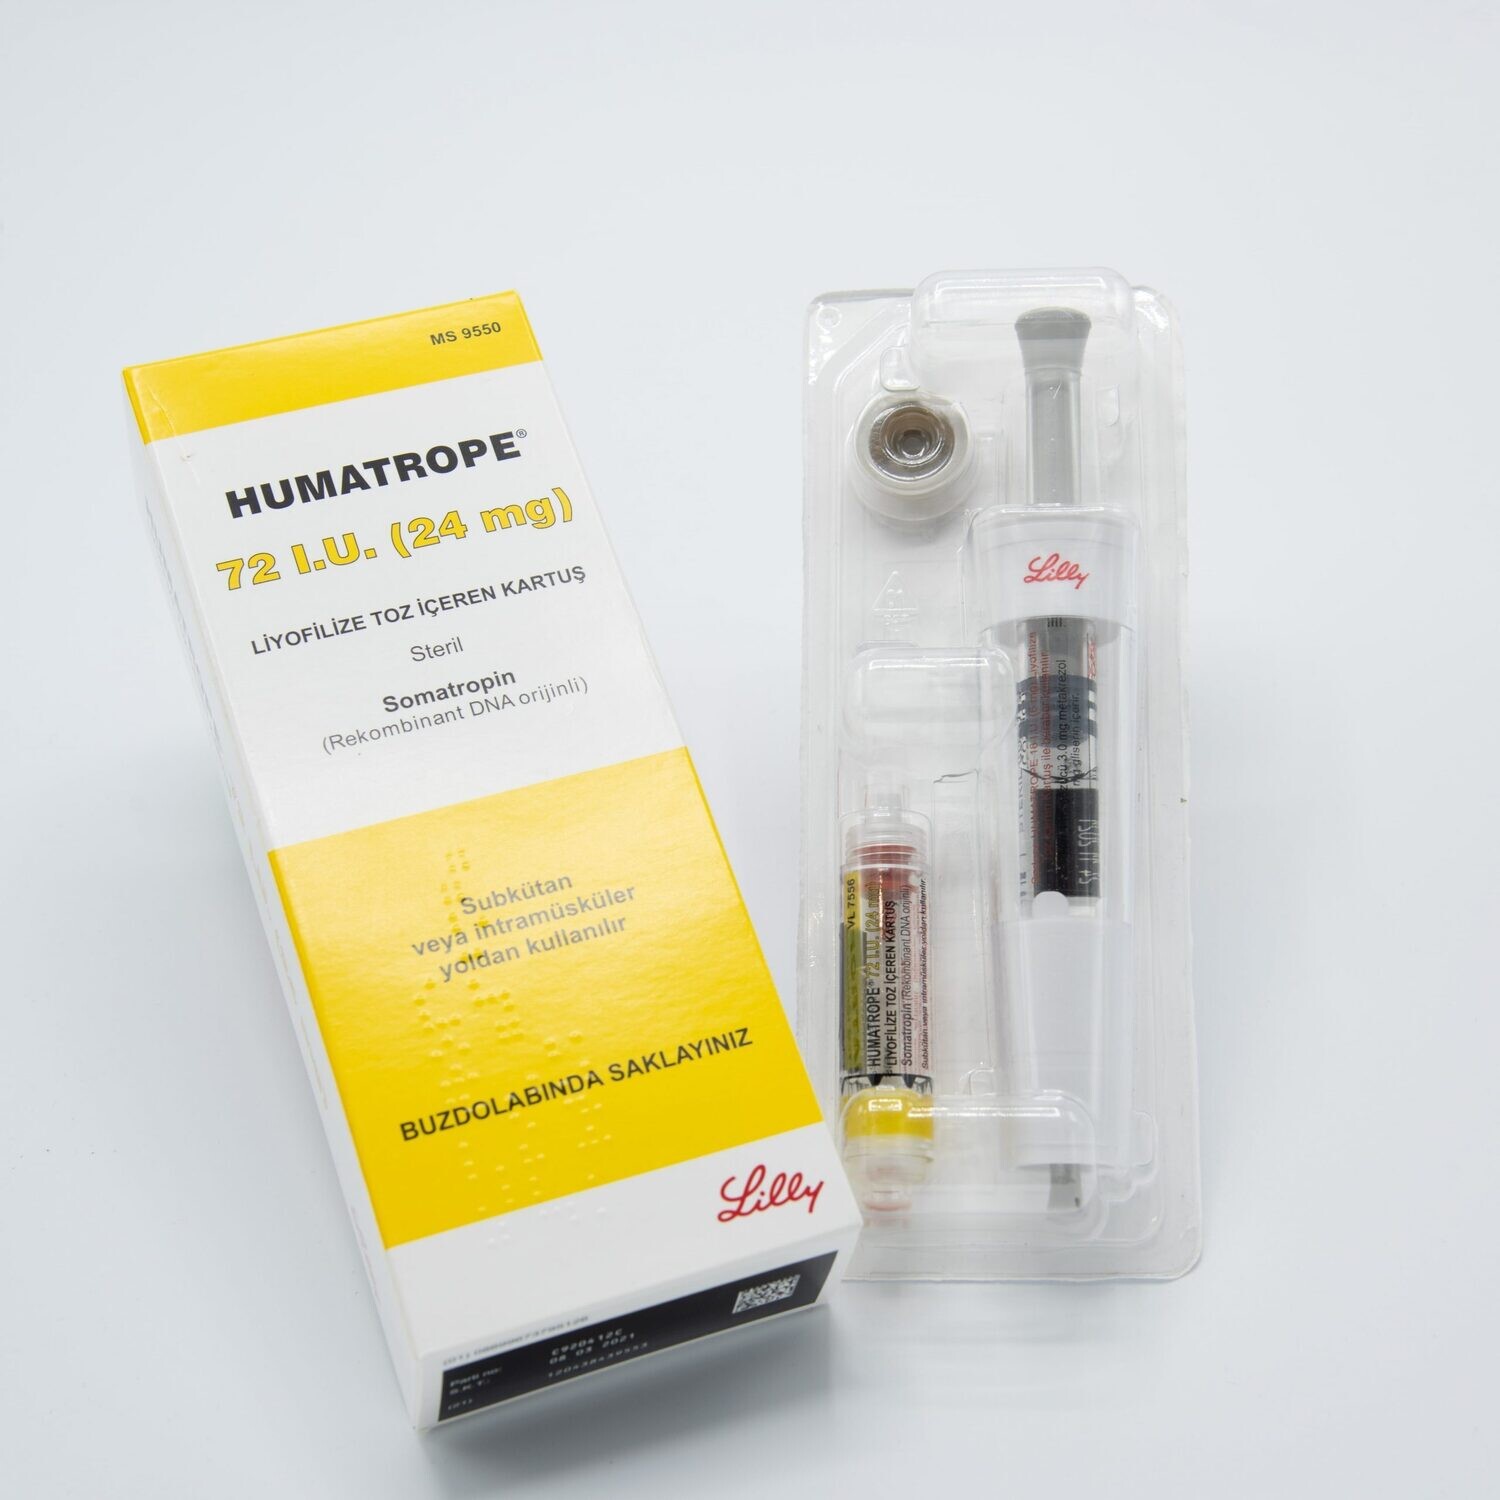 ELI LILLY - HUMATROPE HGH (Somatropin) 72iu (24mg) cartridge